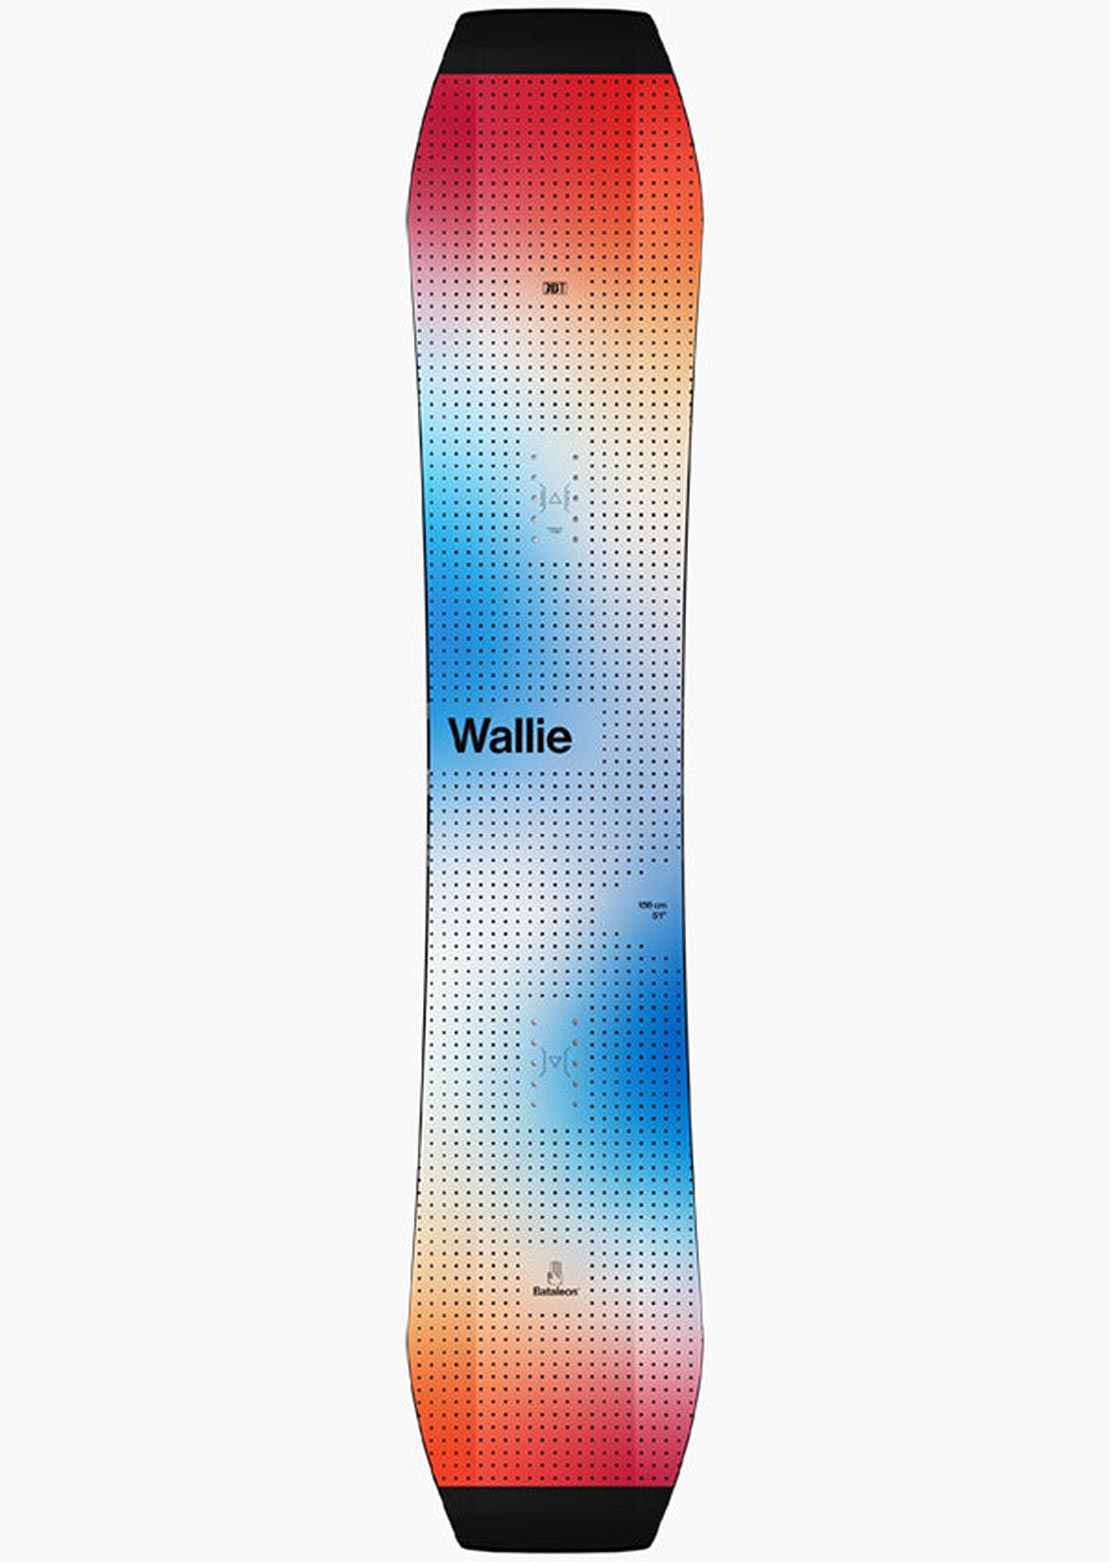 Bataleon Wallie Snowboard